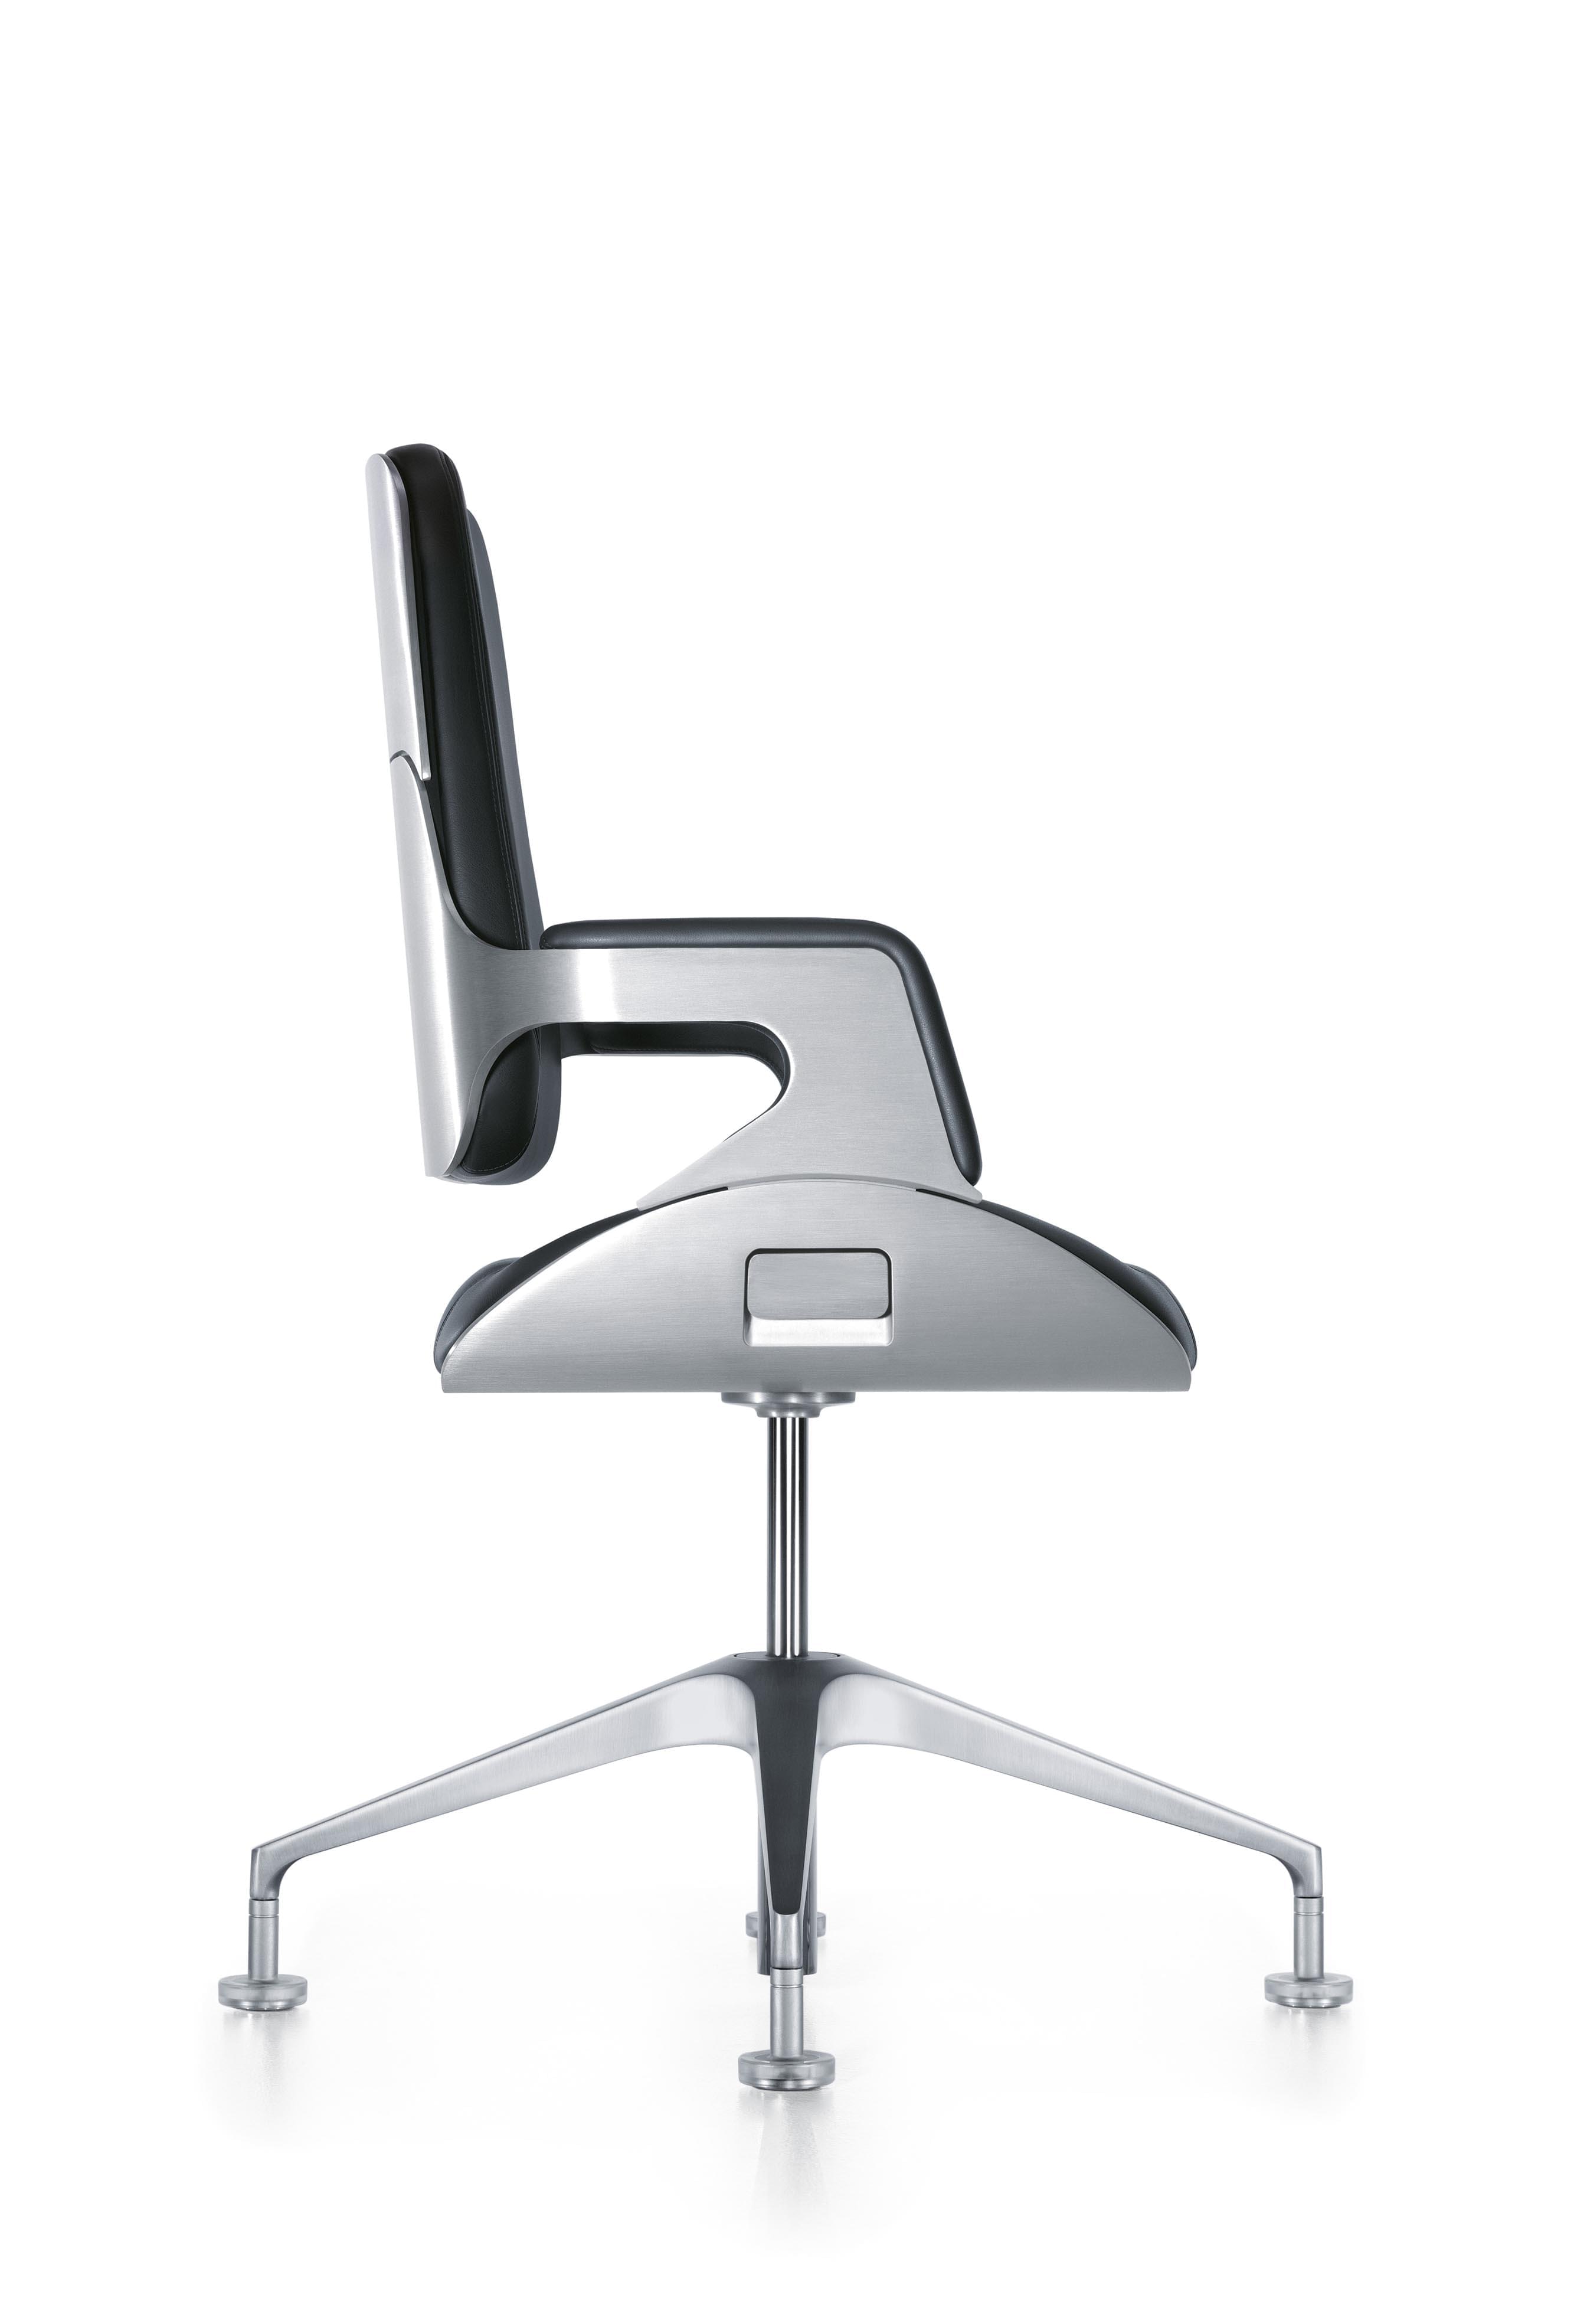 intershul desk chair in silver